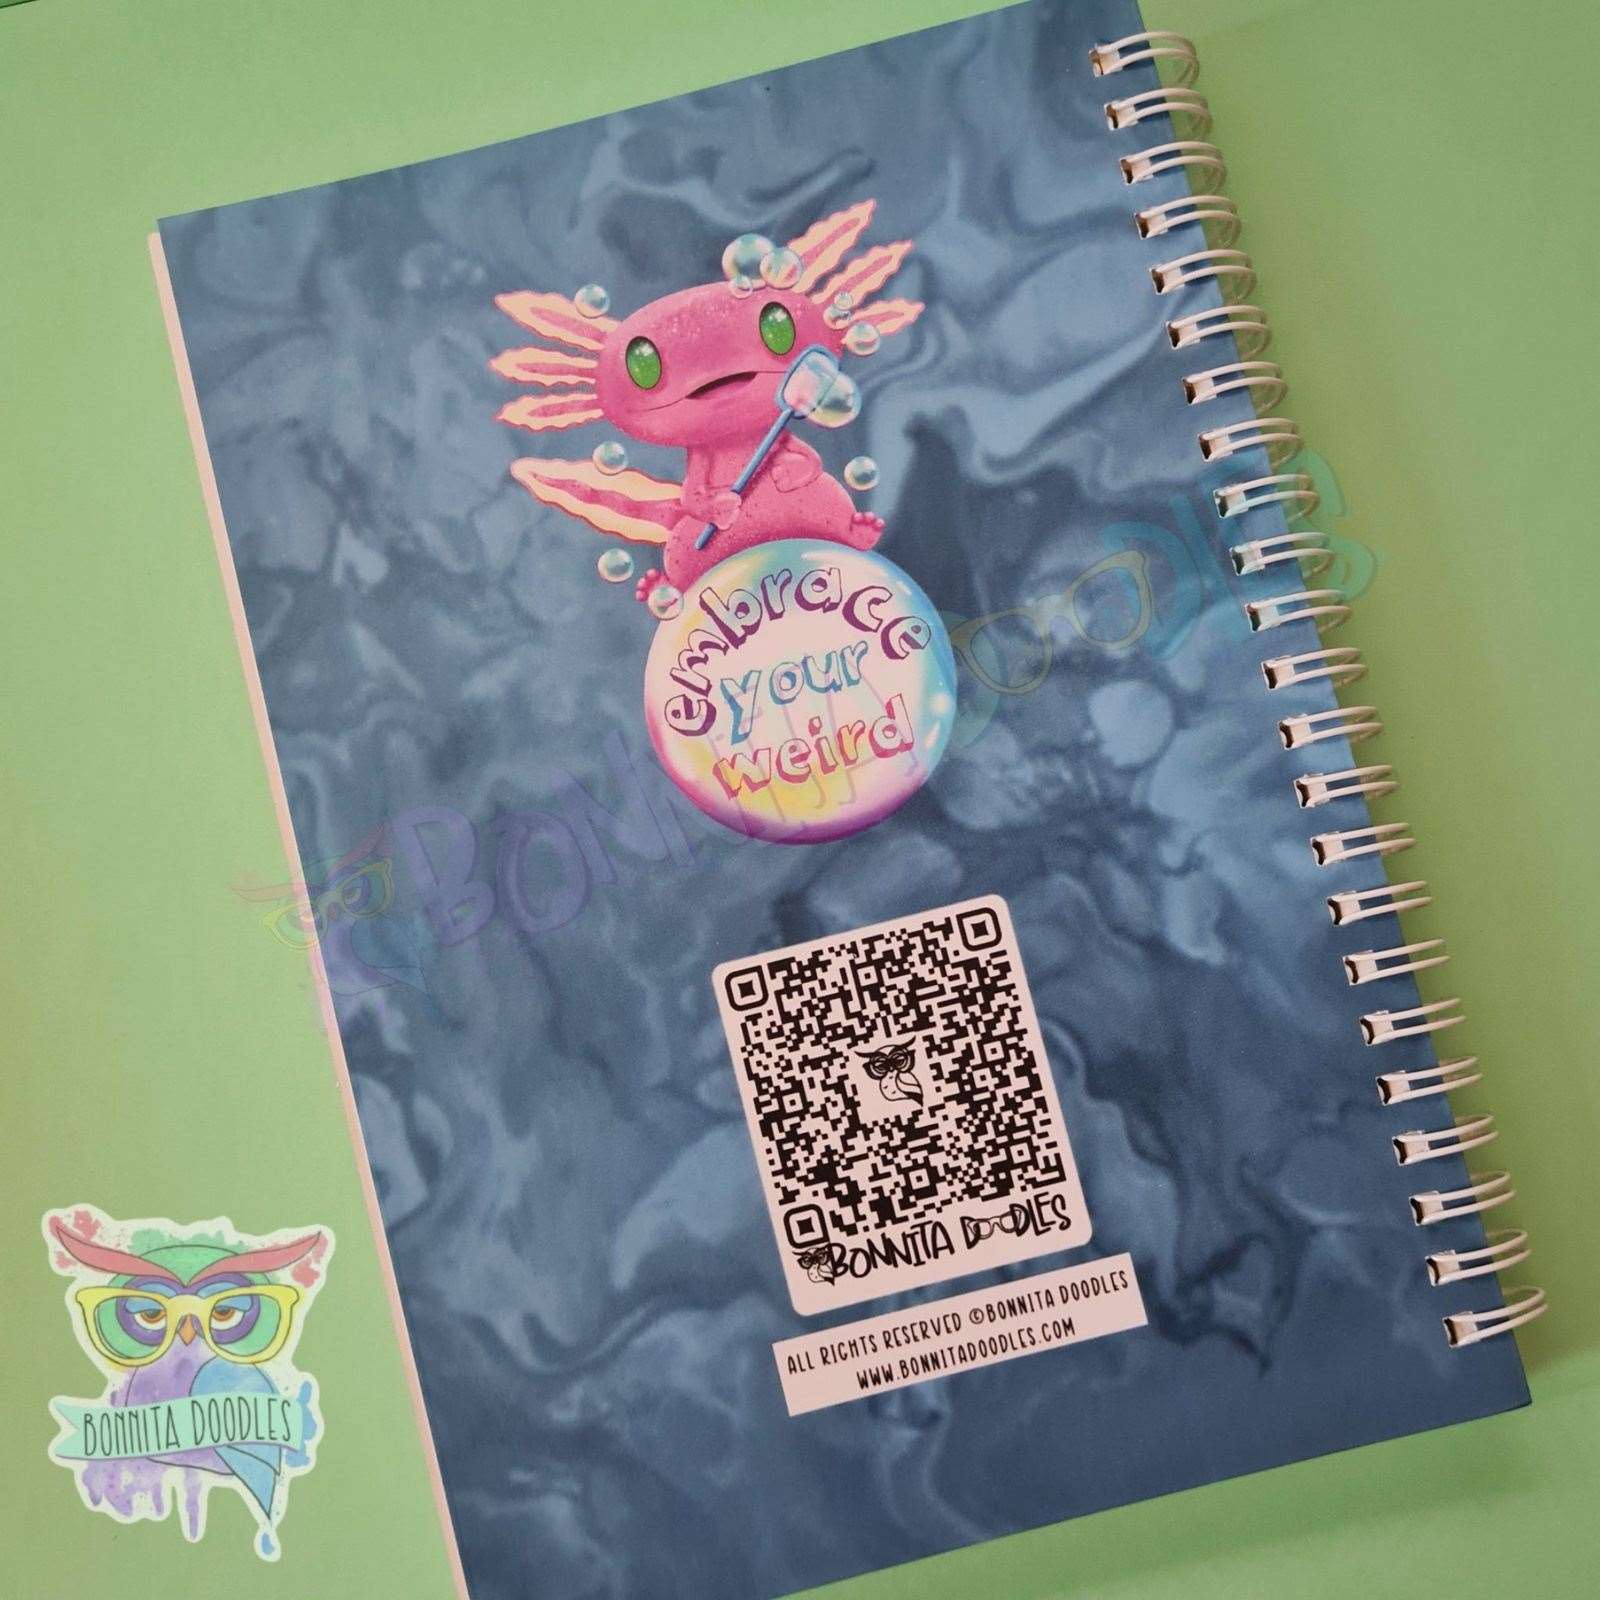 Embrace your weird axolotl notebook - perfect gift